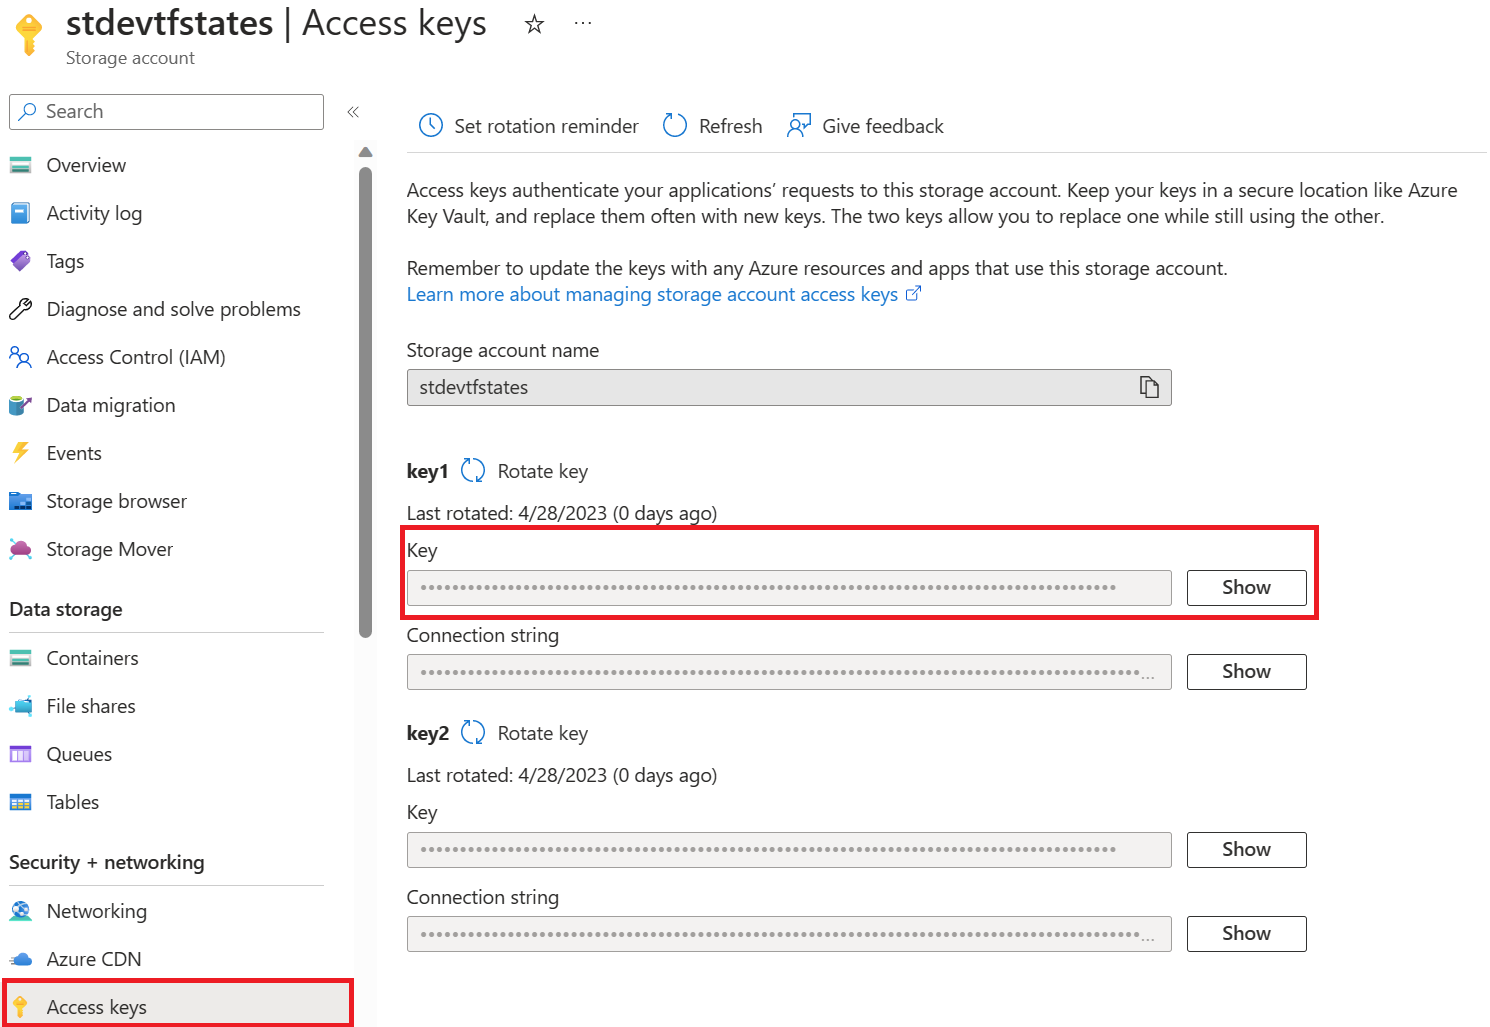 Storage account access keys